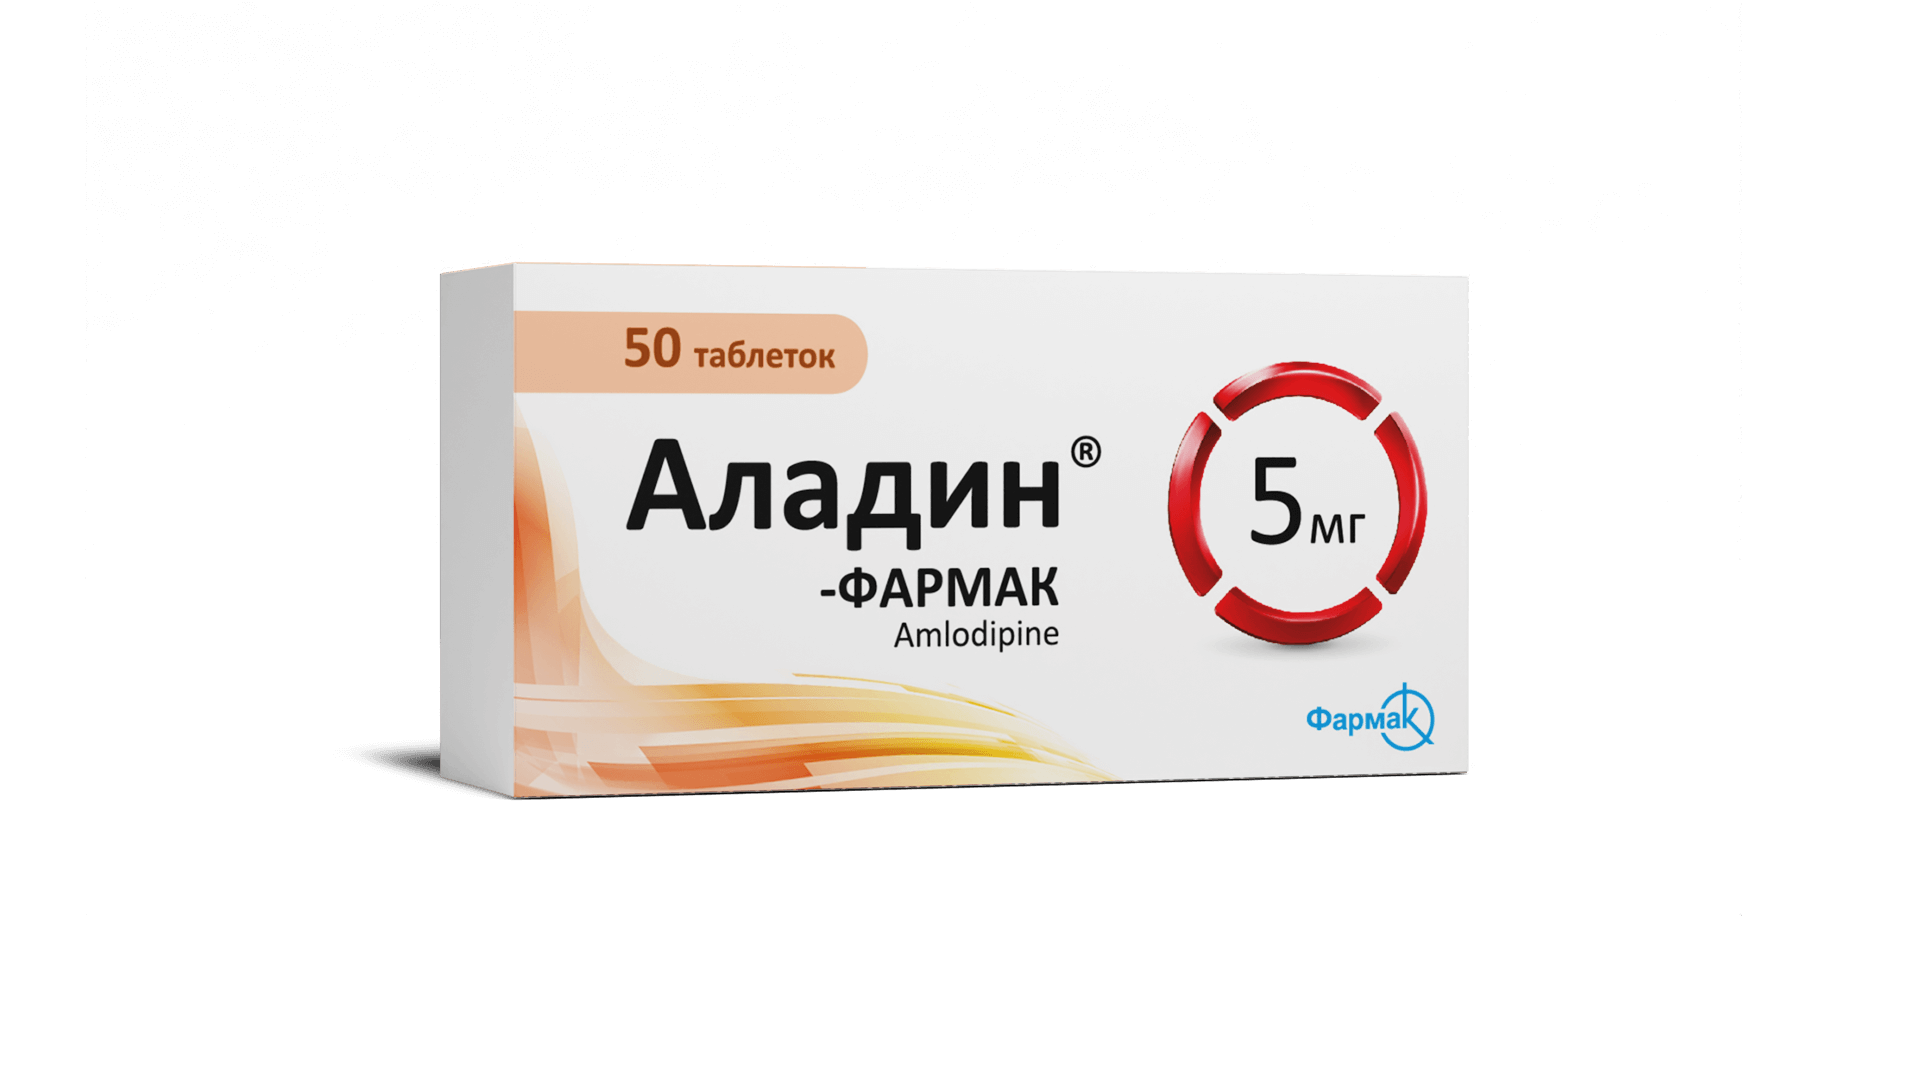 Аладин – Фармак 5 мг (4)